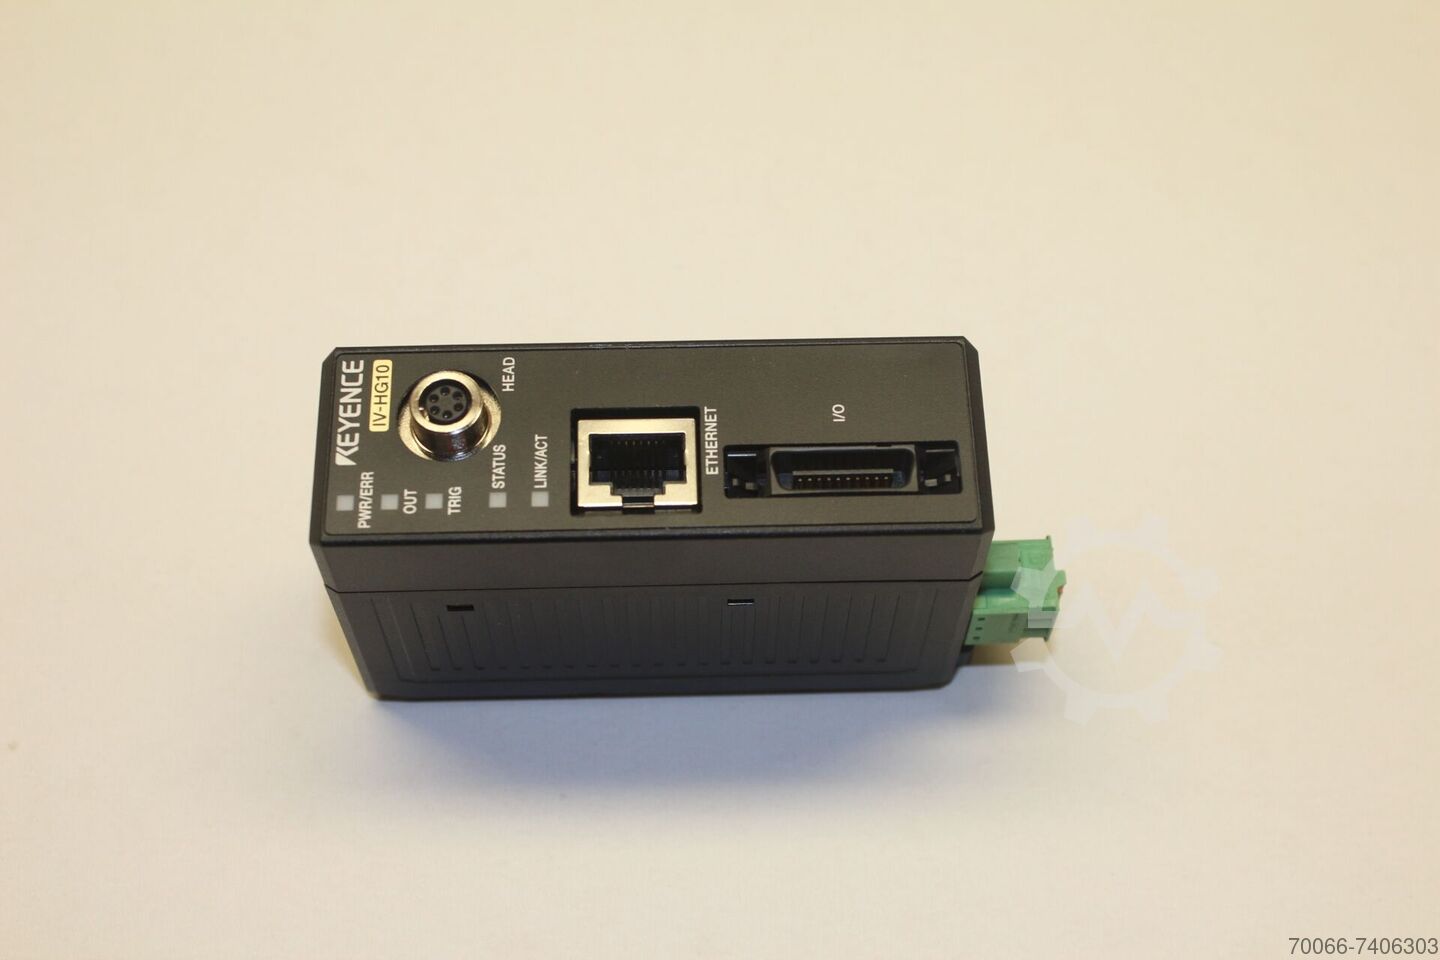 1pc NEW IV-G500MA Image recognition sensor - 1